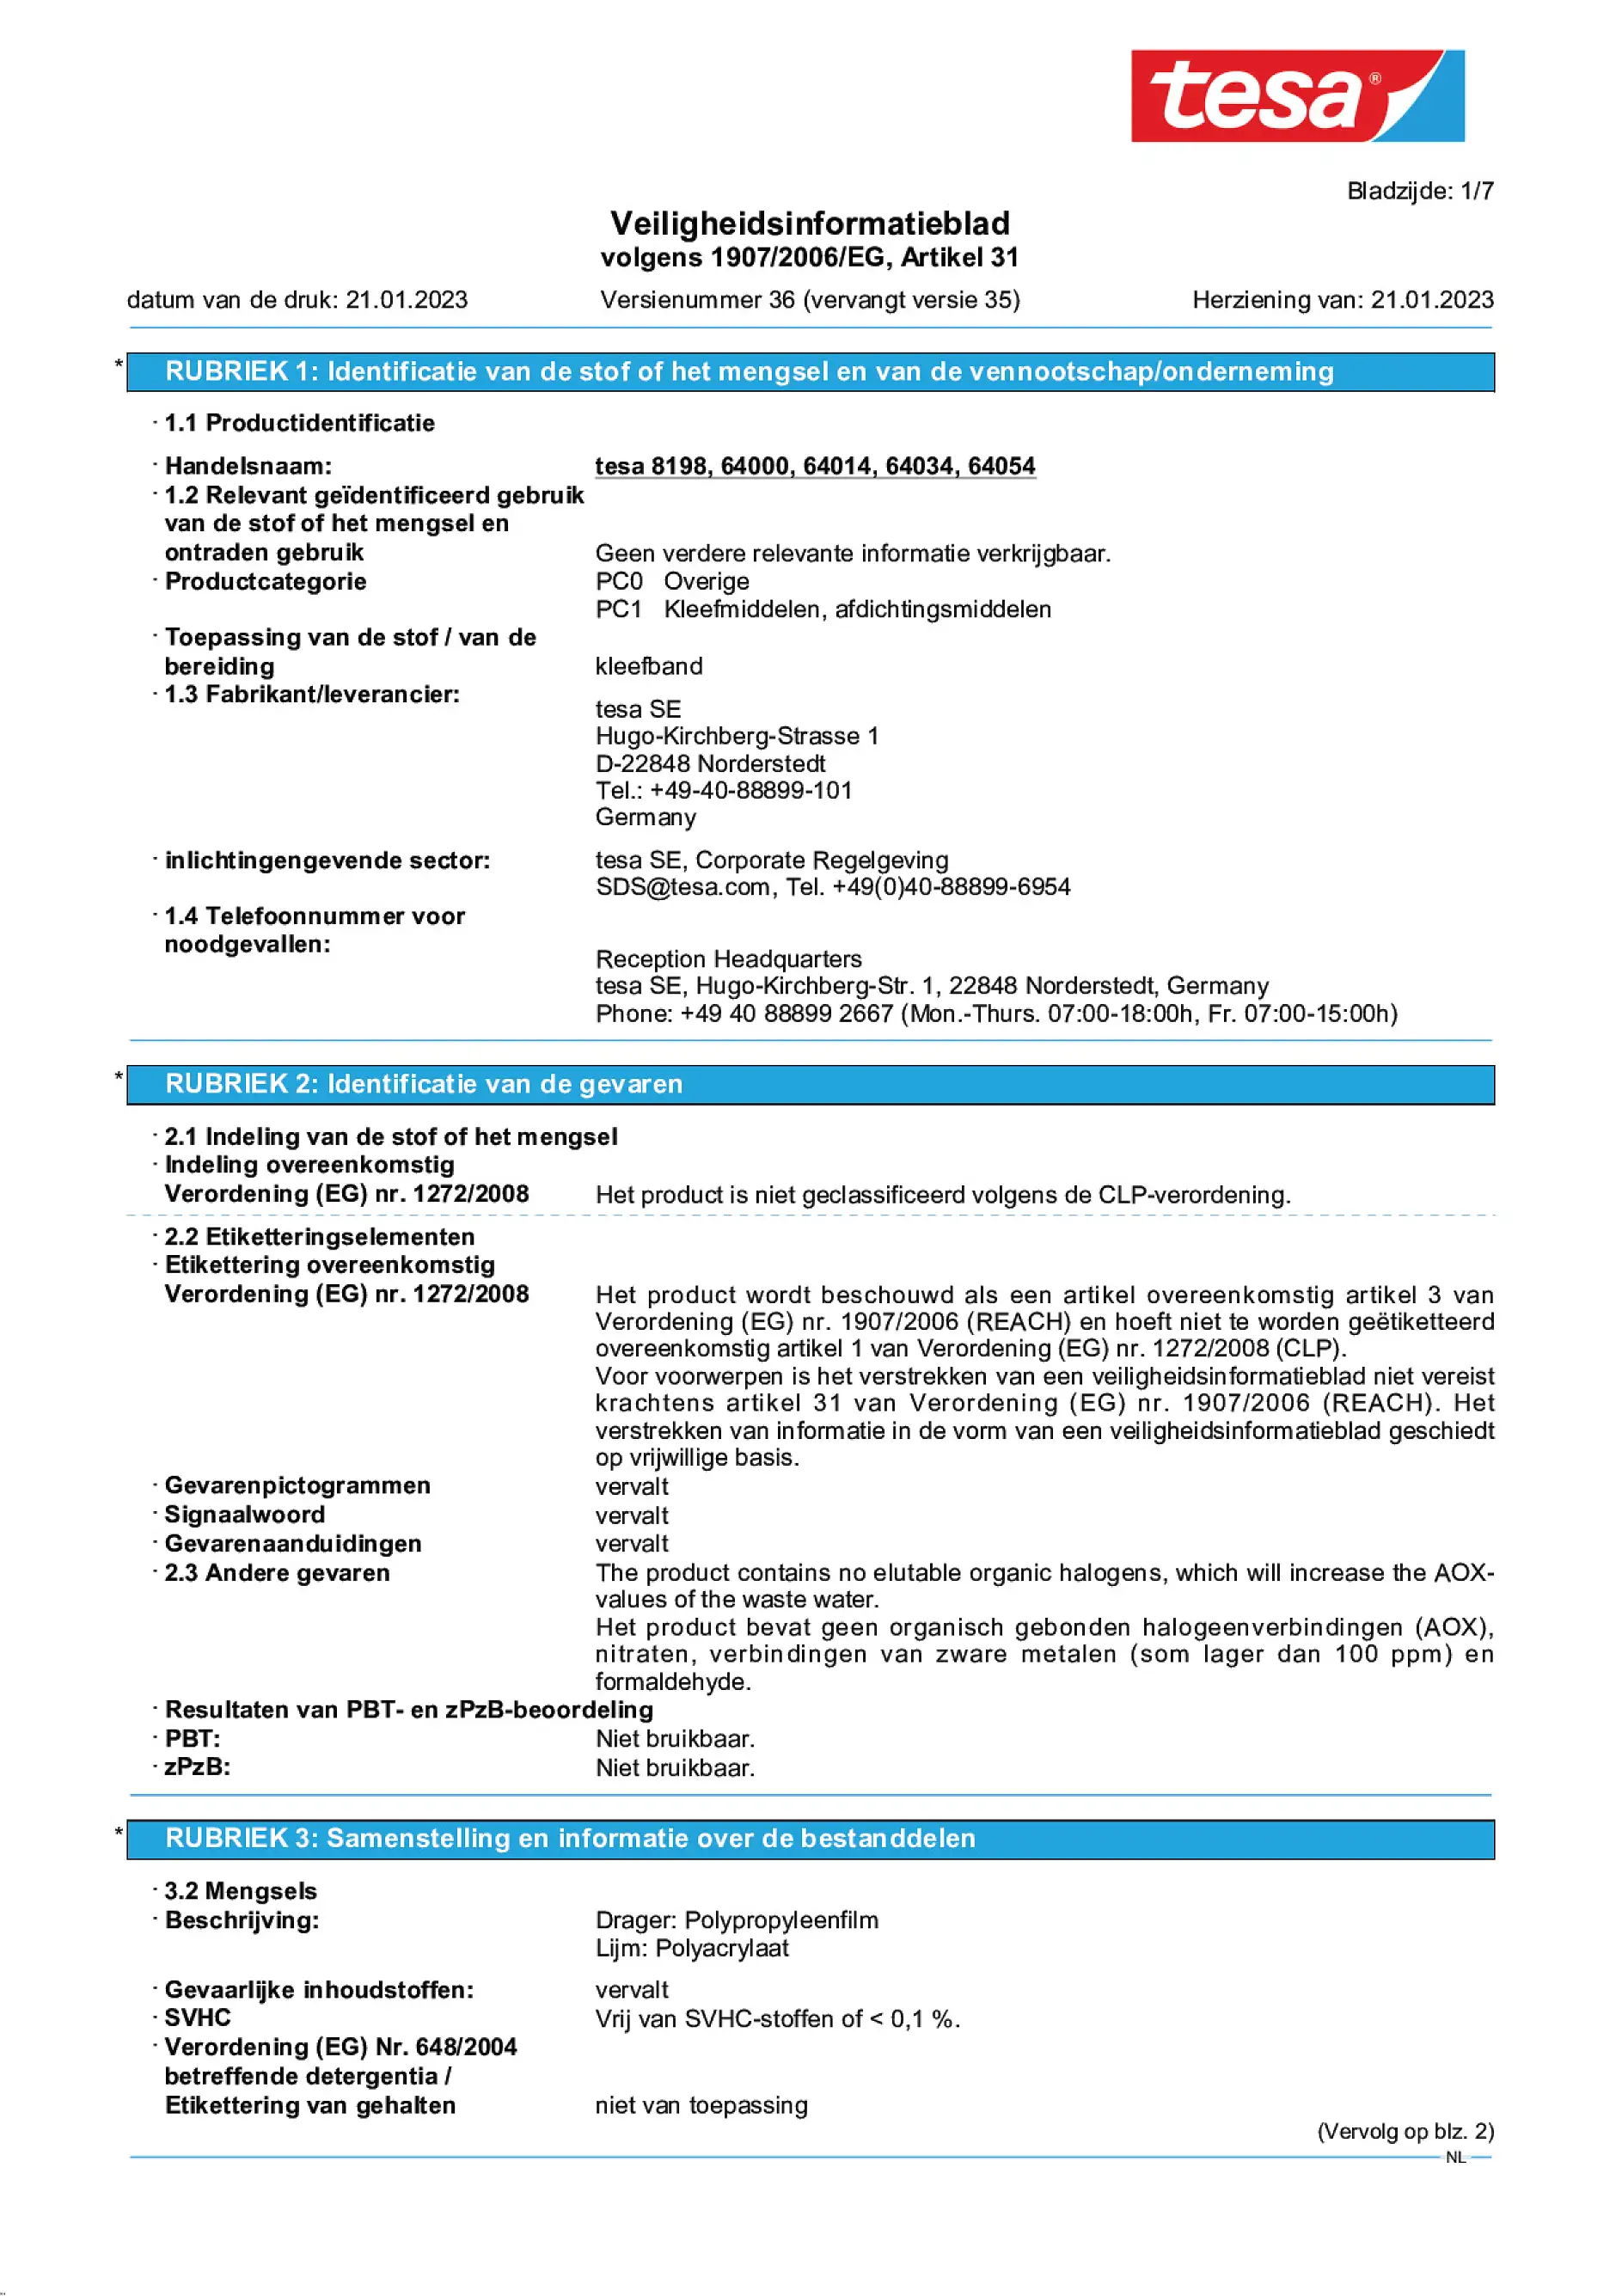 Safety data sheet_tesapack® 57424_nl-NL_v36